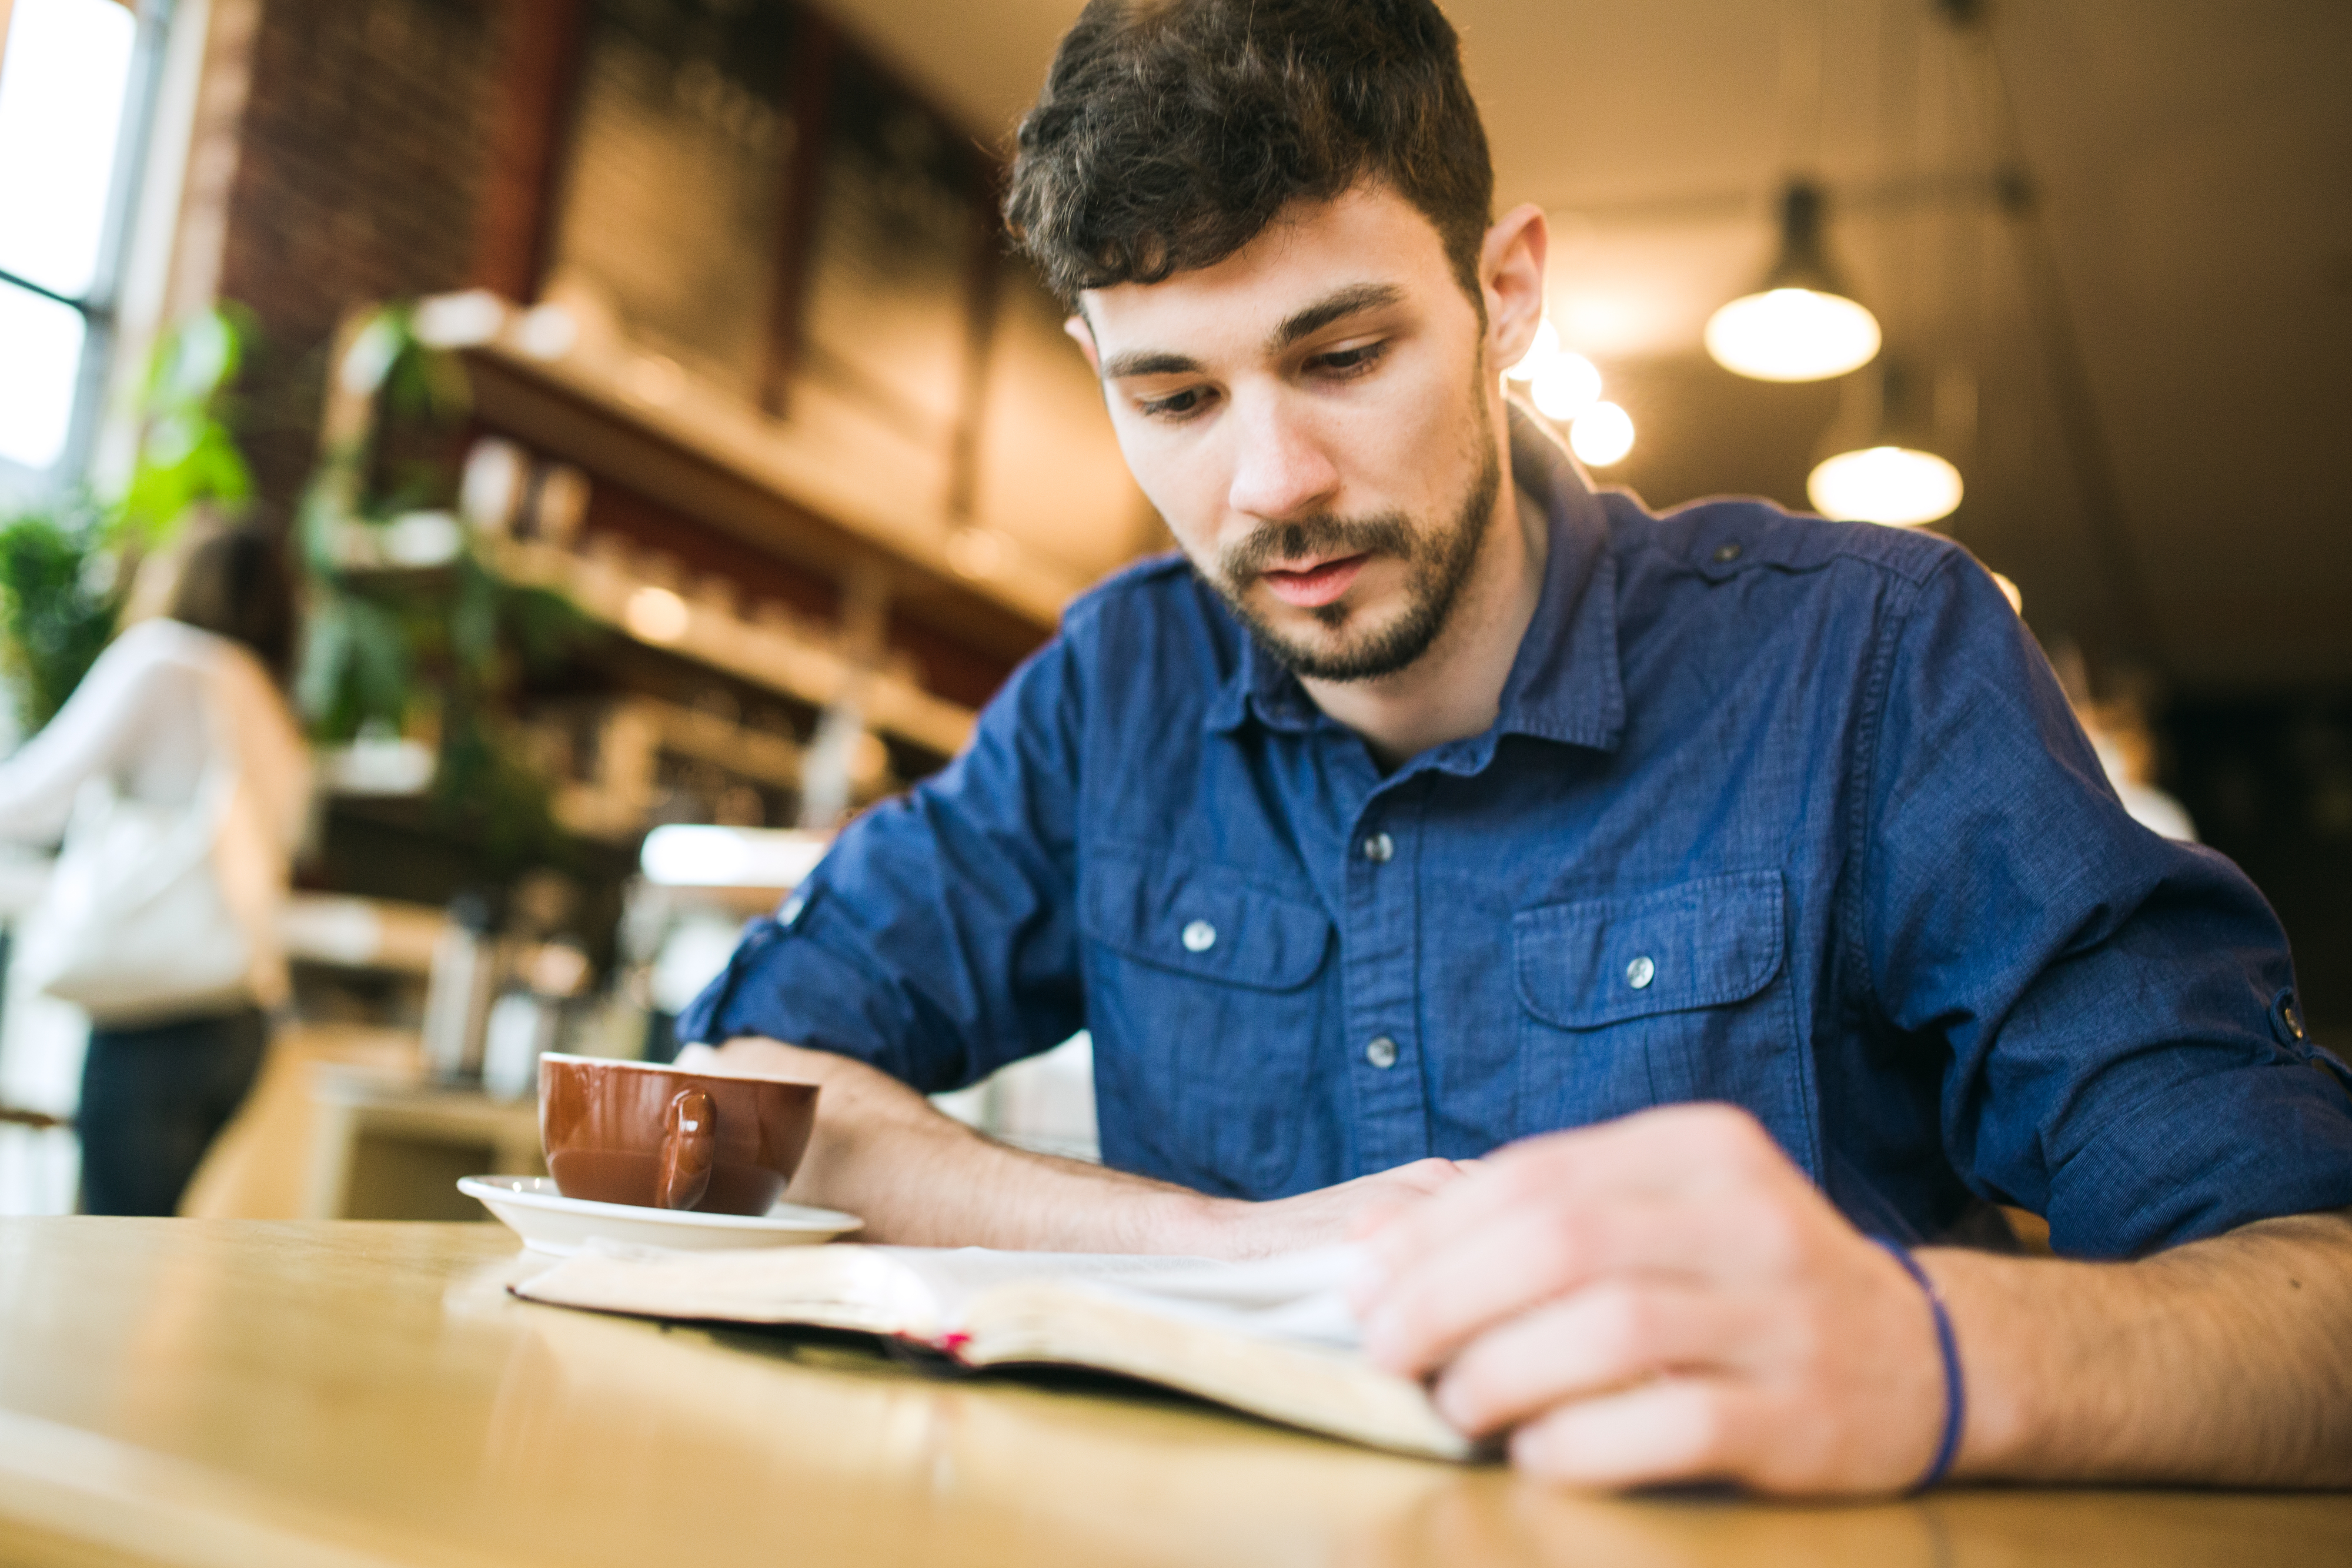 A young man reading in a café